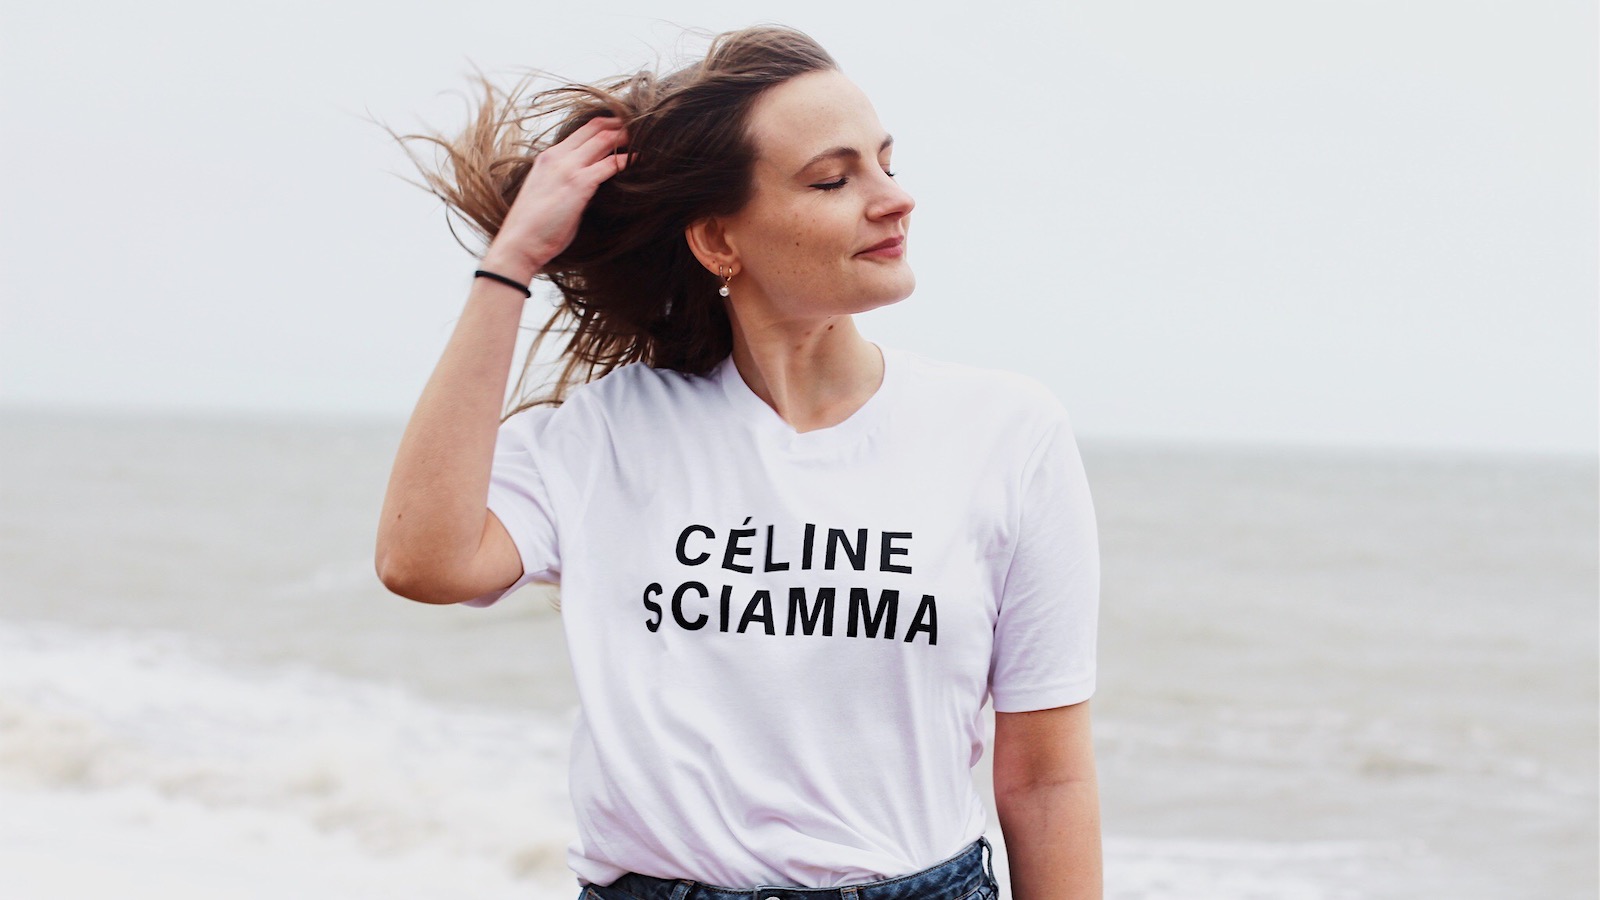 Céline Sciamma T-shirts by Girls on Tops